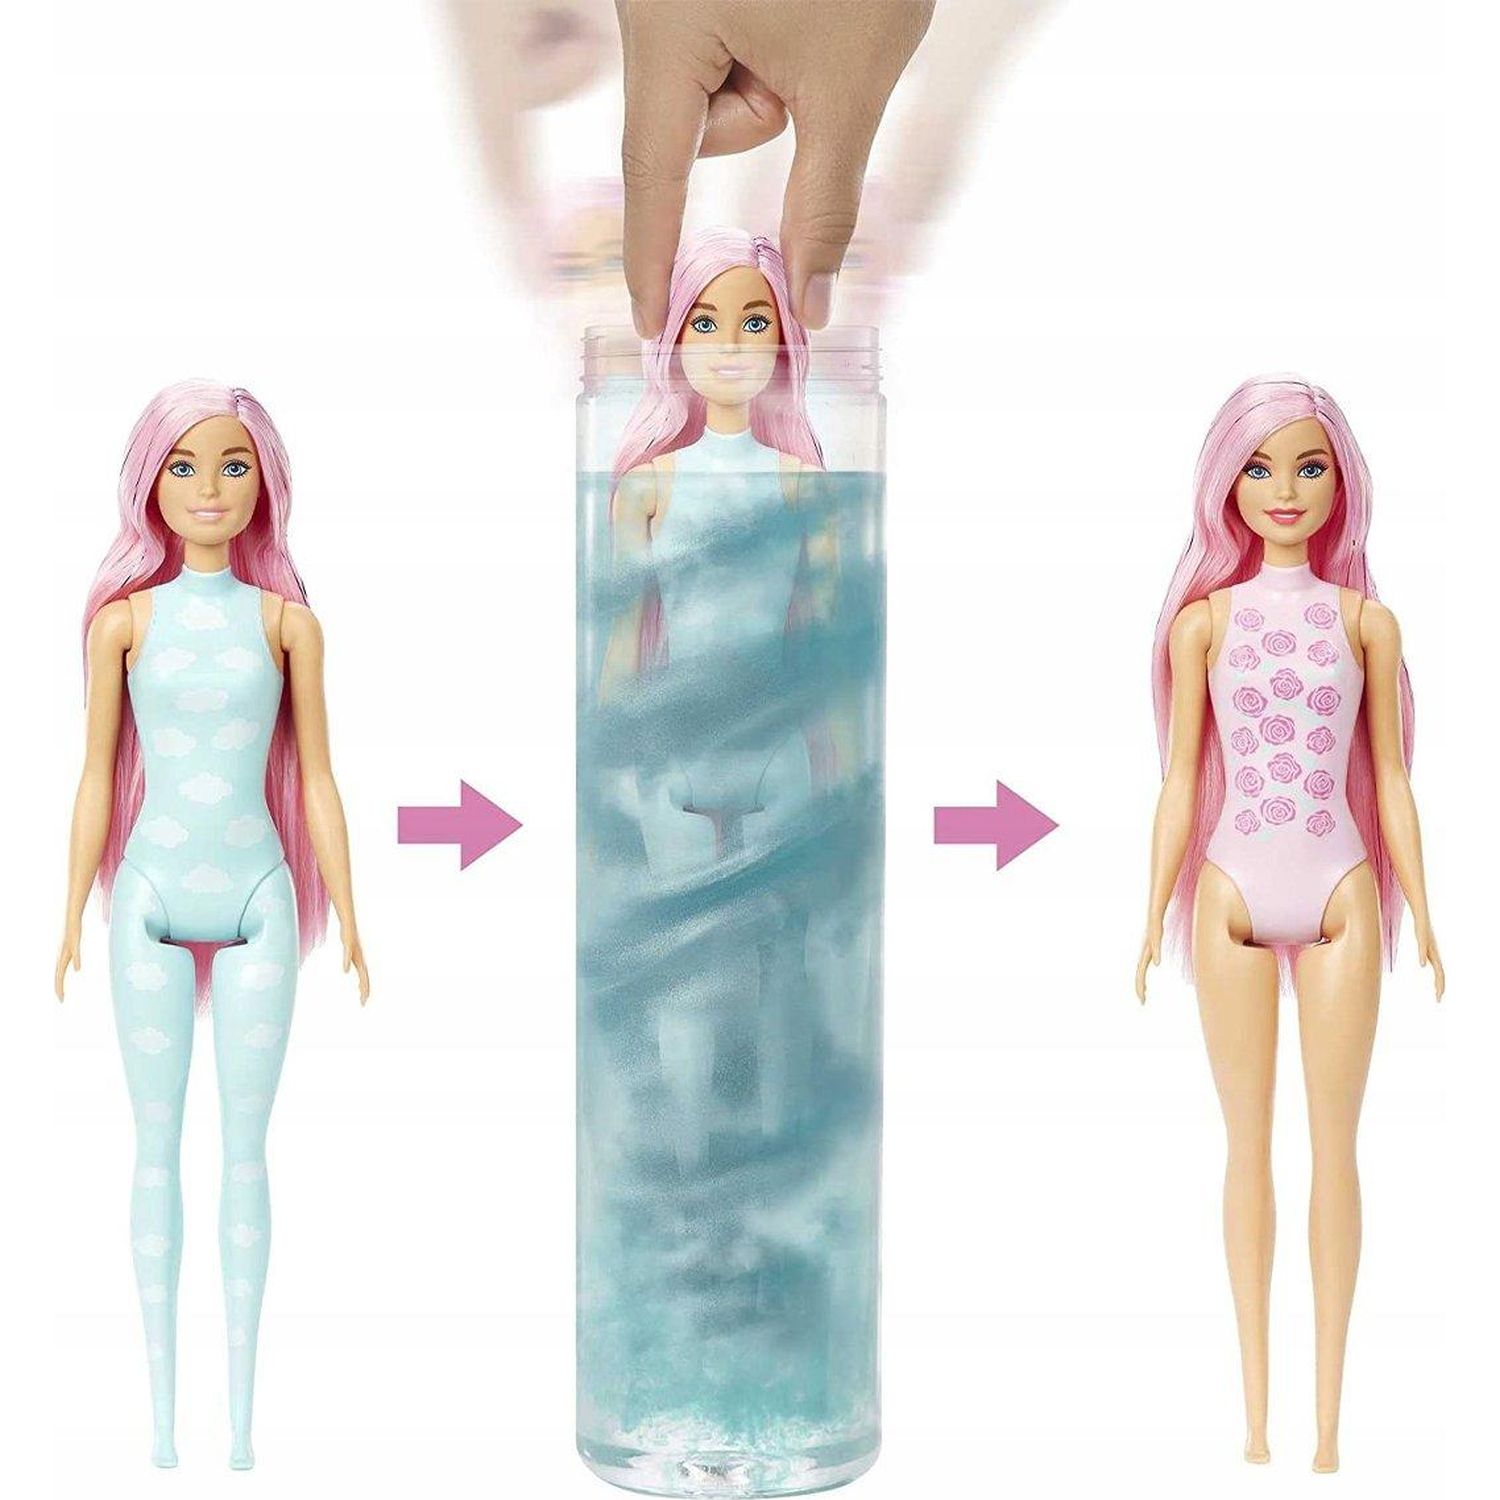 Кукла Barbie в непрозрачной упаковке (Сюрприз) HDN71 HDN71 - фото 5